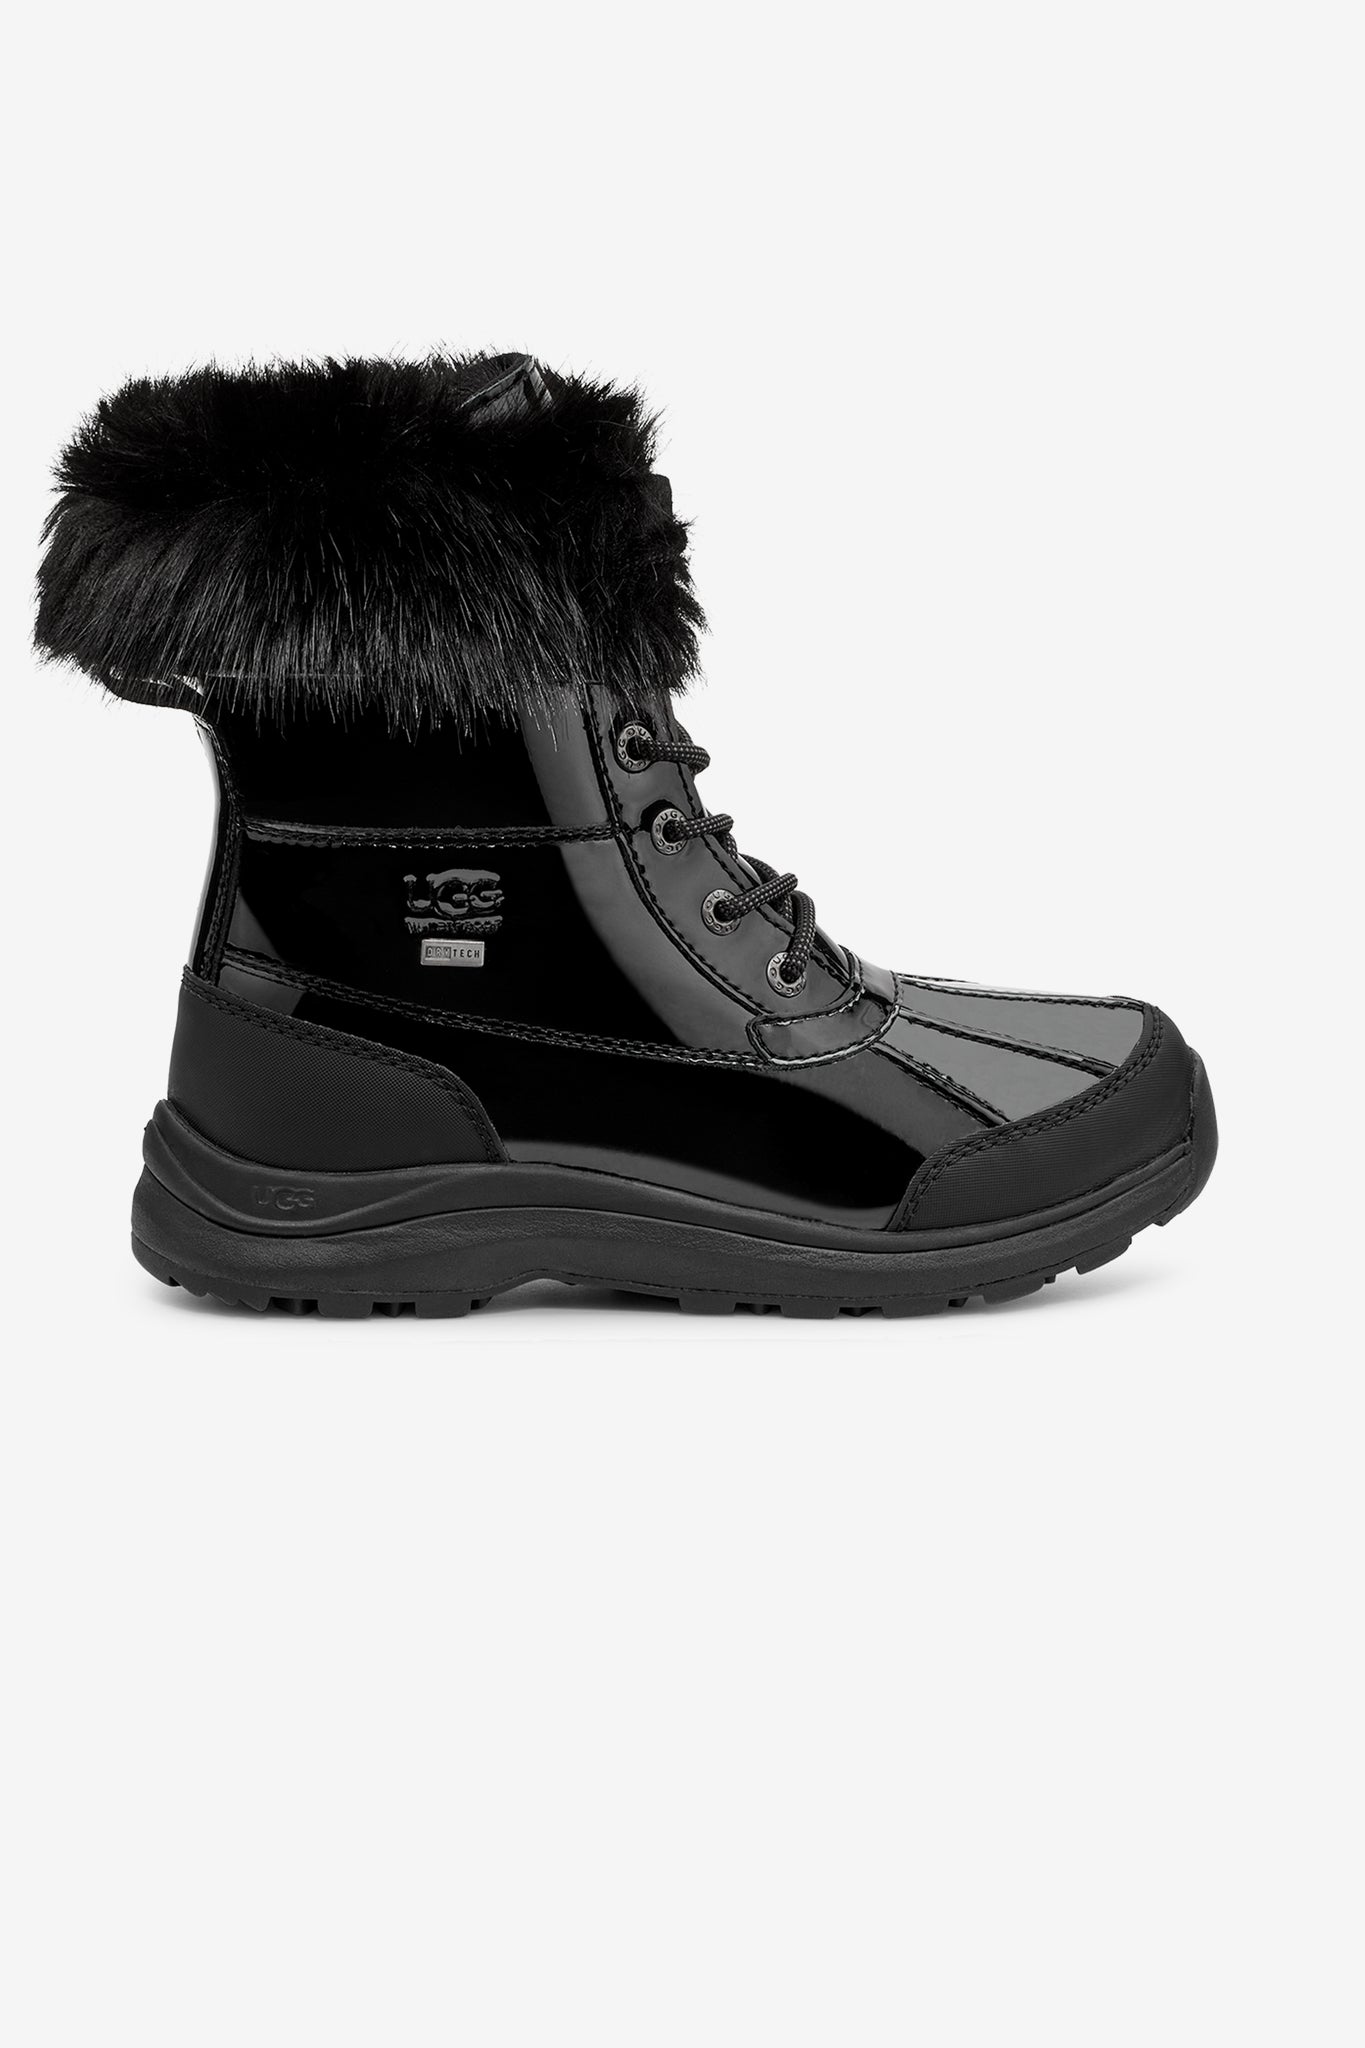 UGG Women's Adirondack Boot III Patent in Black